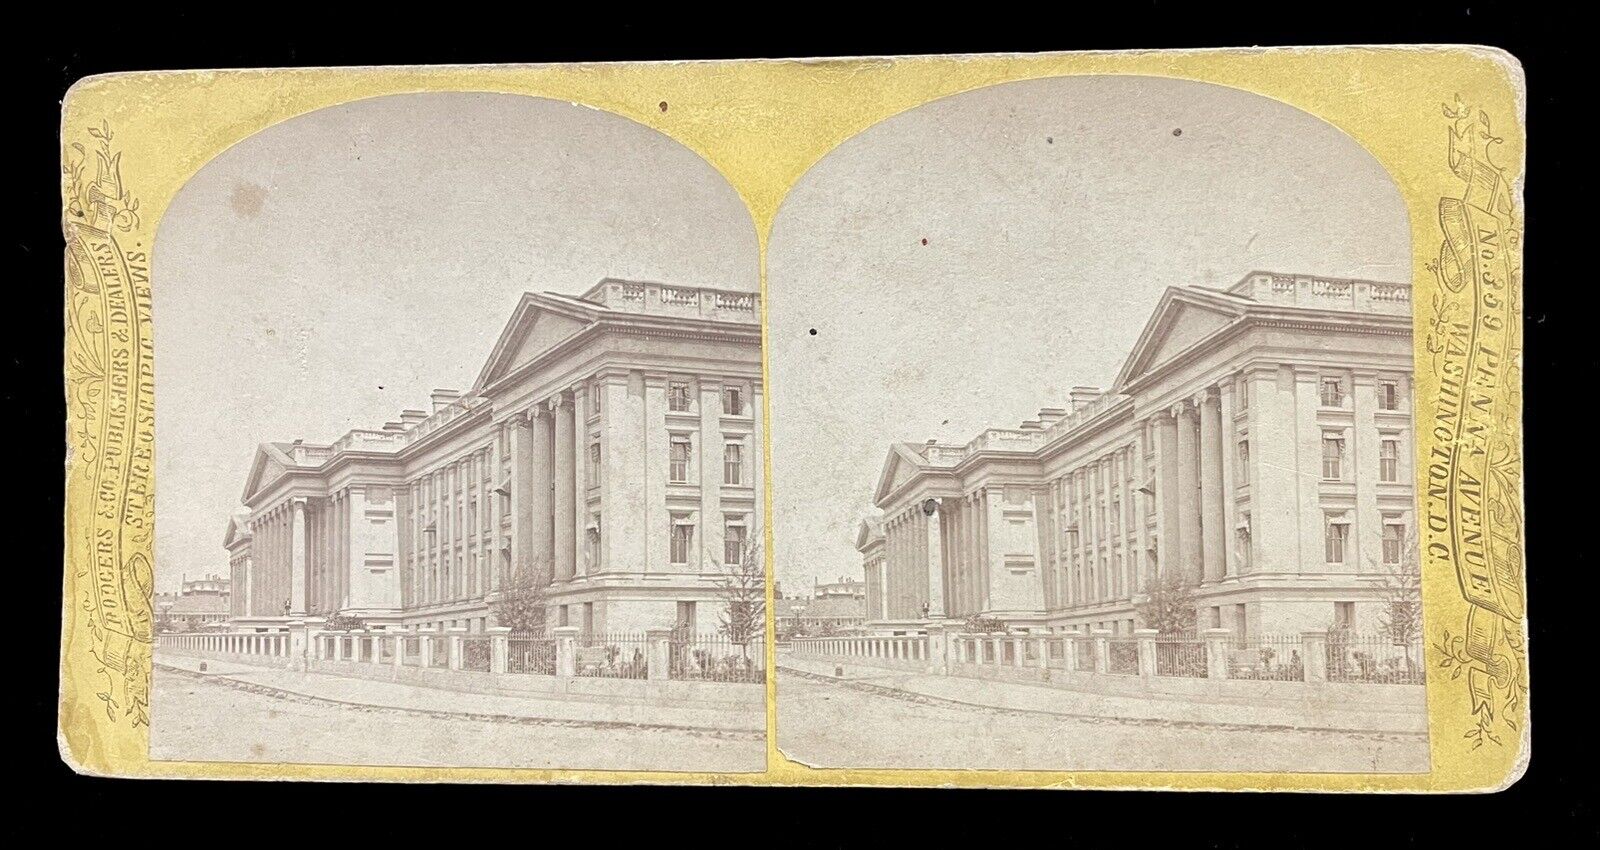 U.S. TREASURY BUILDING STEREOVIEW by RODGERS  1880s  WASHINGTON D.C.